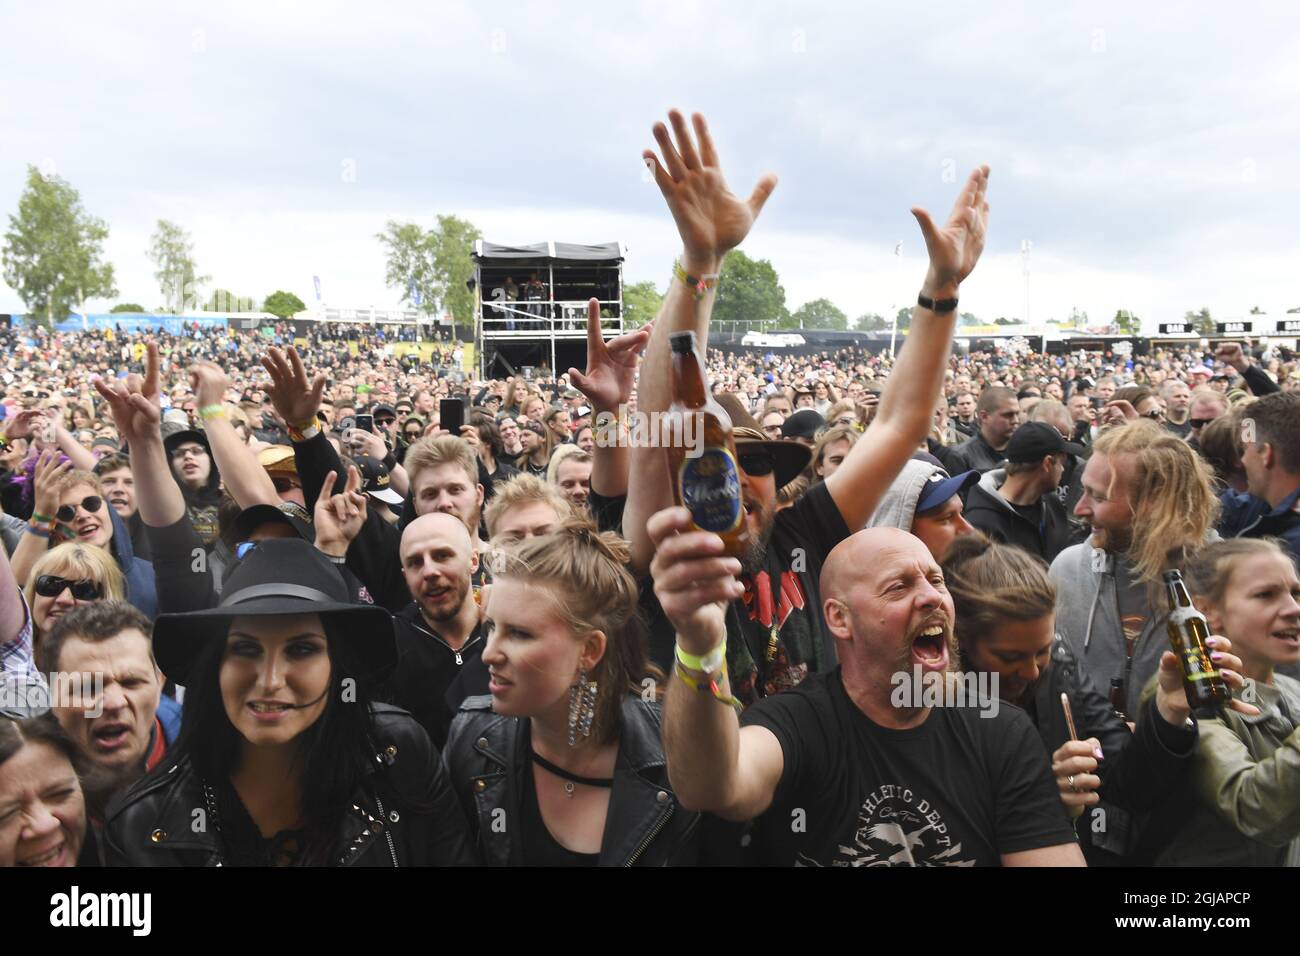 NORJE 20170607 Music lovers are seen the first day of the 'Sweden Rock Festival' in Norje Sweden on Wednesday. Foto: Fredrik Sandberg / TT / kod 10080 swedenrock2017  Stock Photo